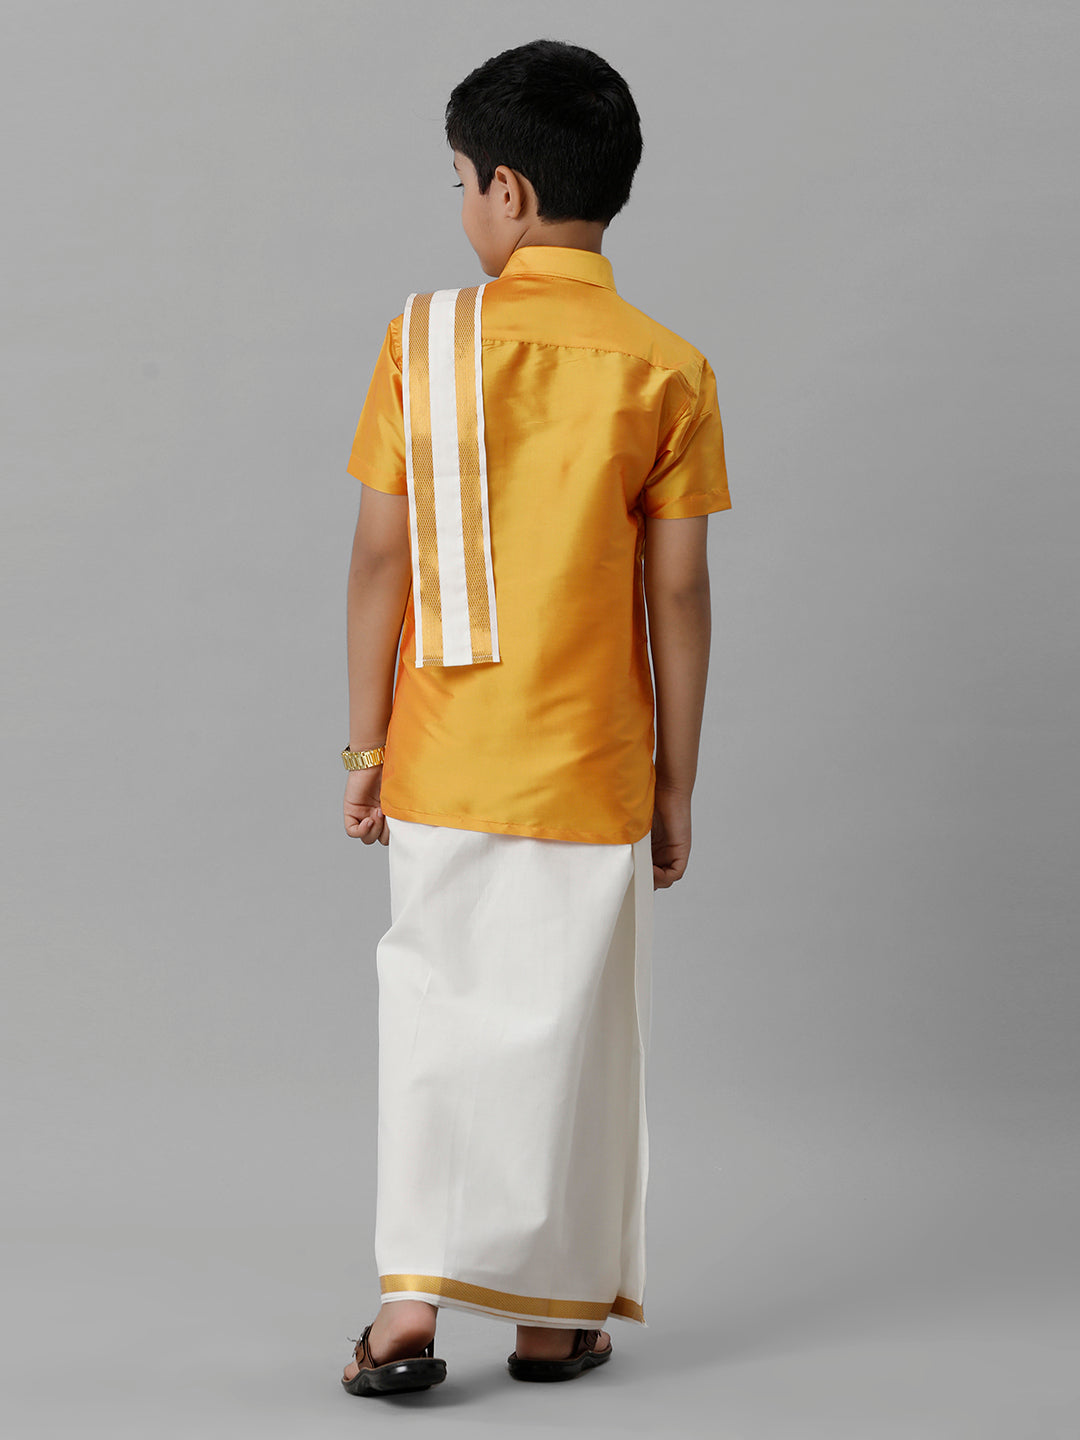 Boys Silk Cotton Yellow Half Sleeves Shirt with Adjustable Cream Dhoti Towel Combo K6-Back view